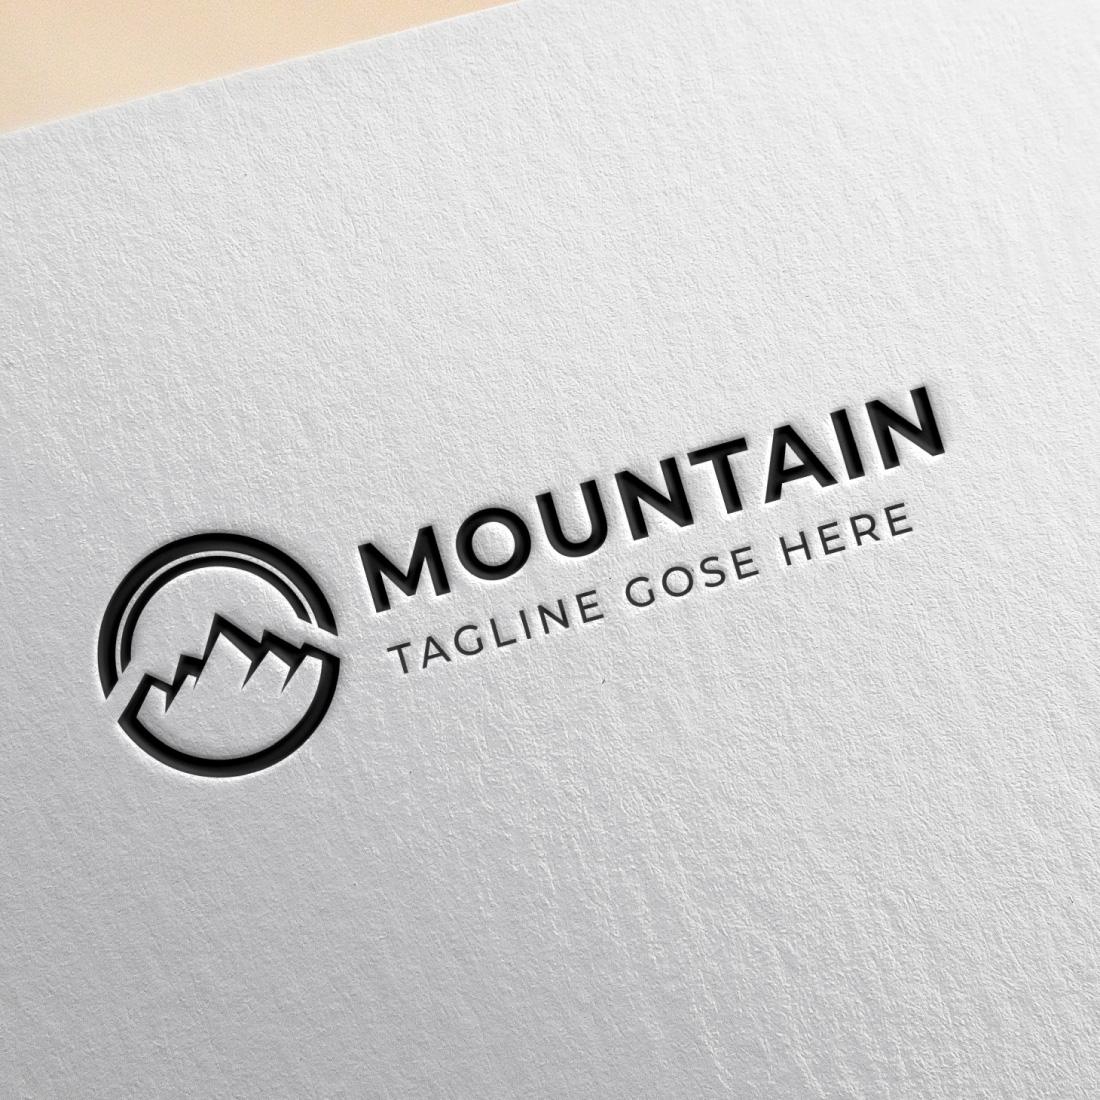 Circle Mountain Logo Template cover image.